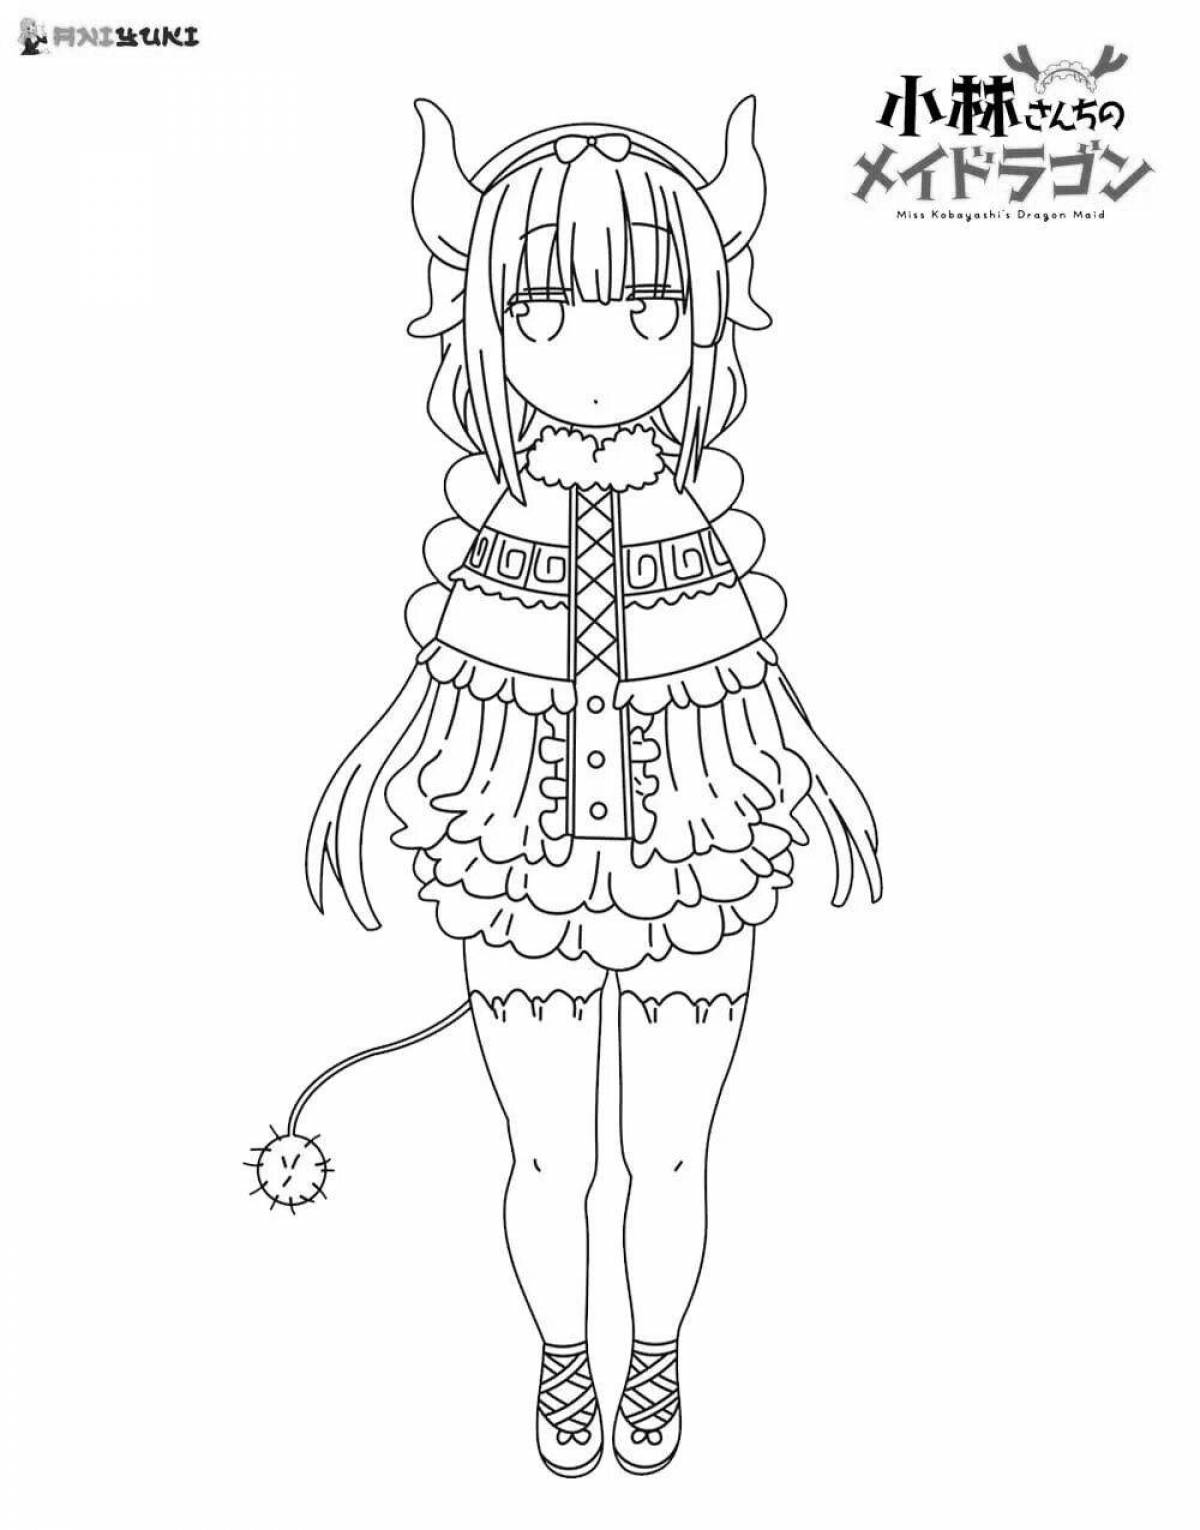 Kobayashi's wonderful anime maid dragon